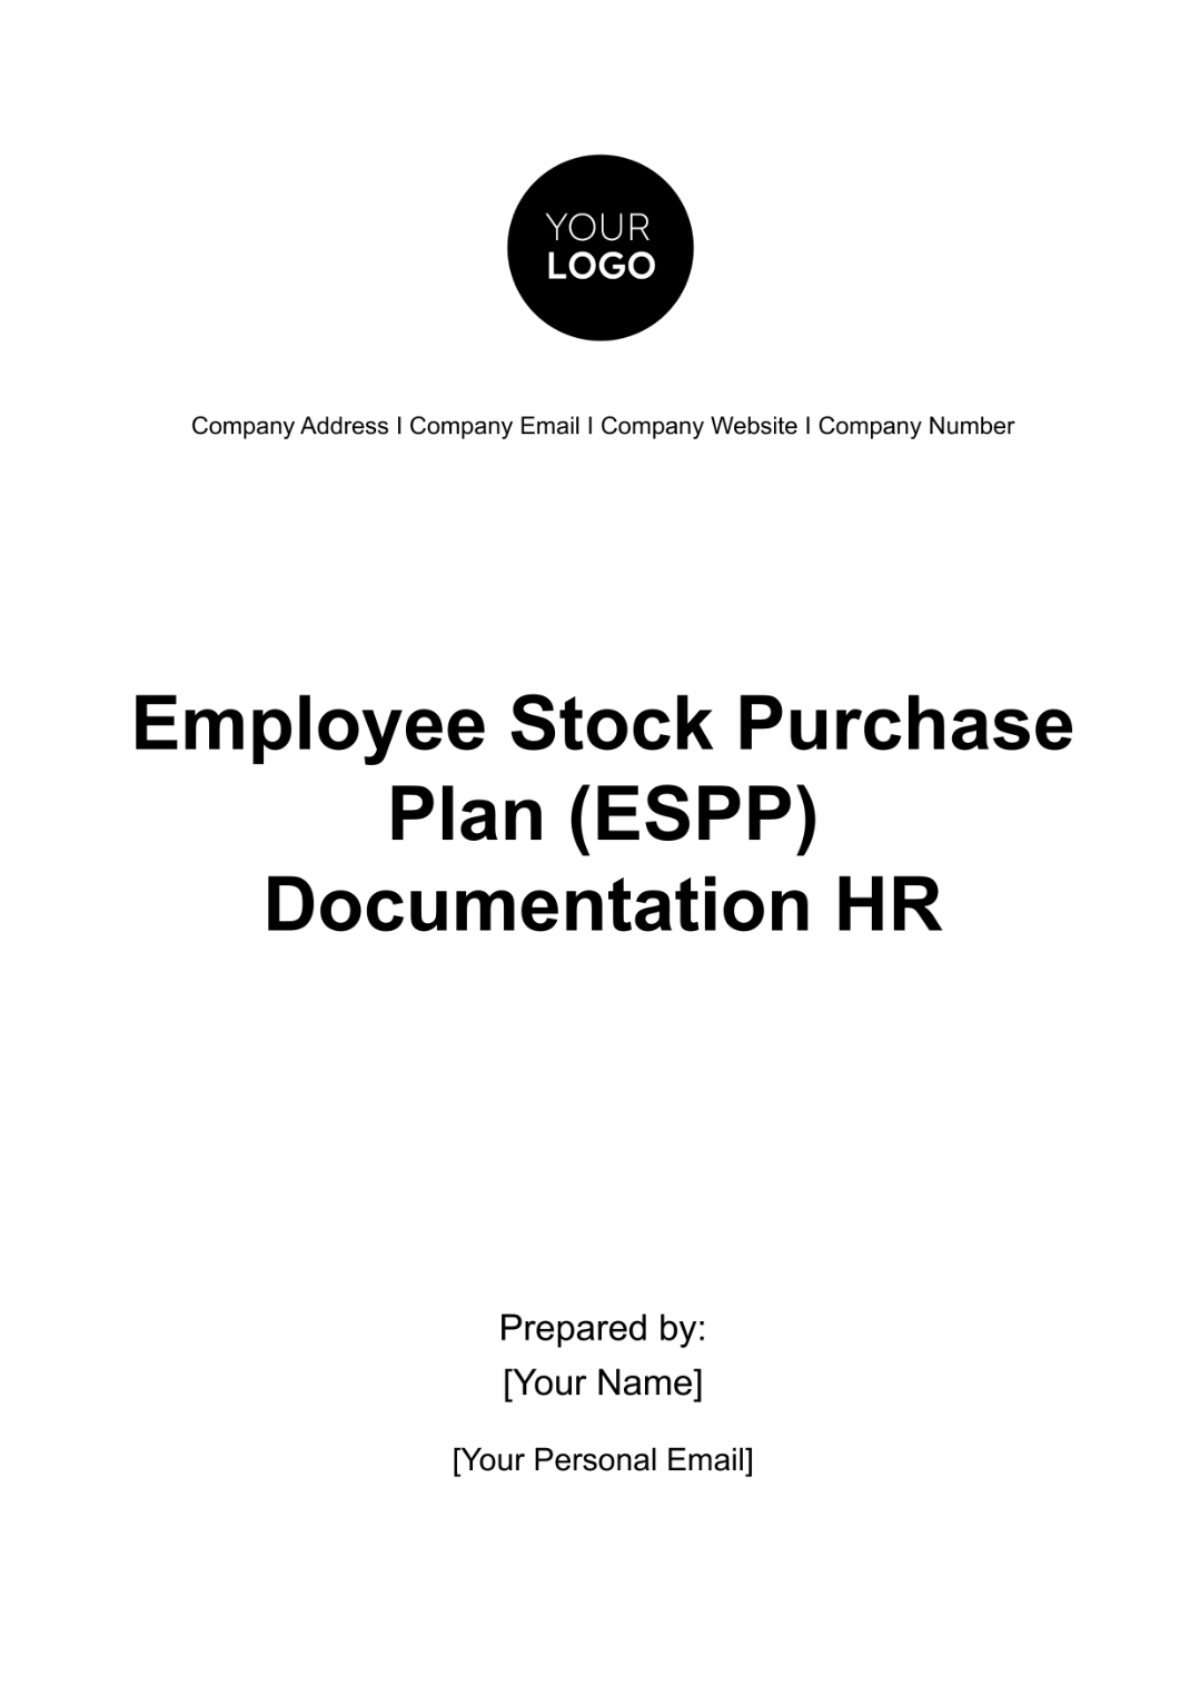 Free Employee Stock Purchase Plan (ESPP) Documentation HR Template